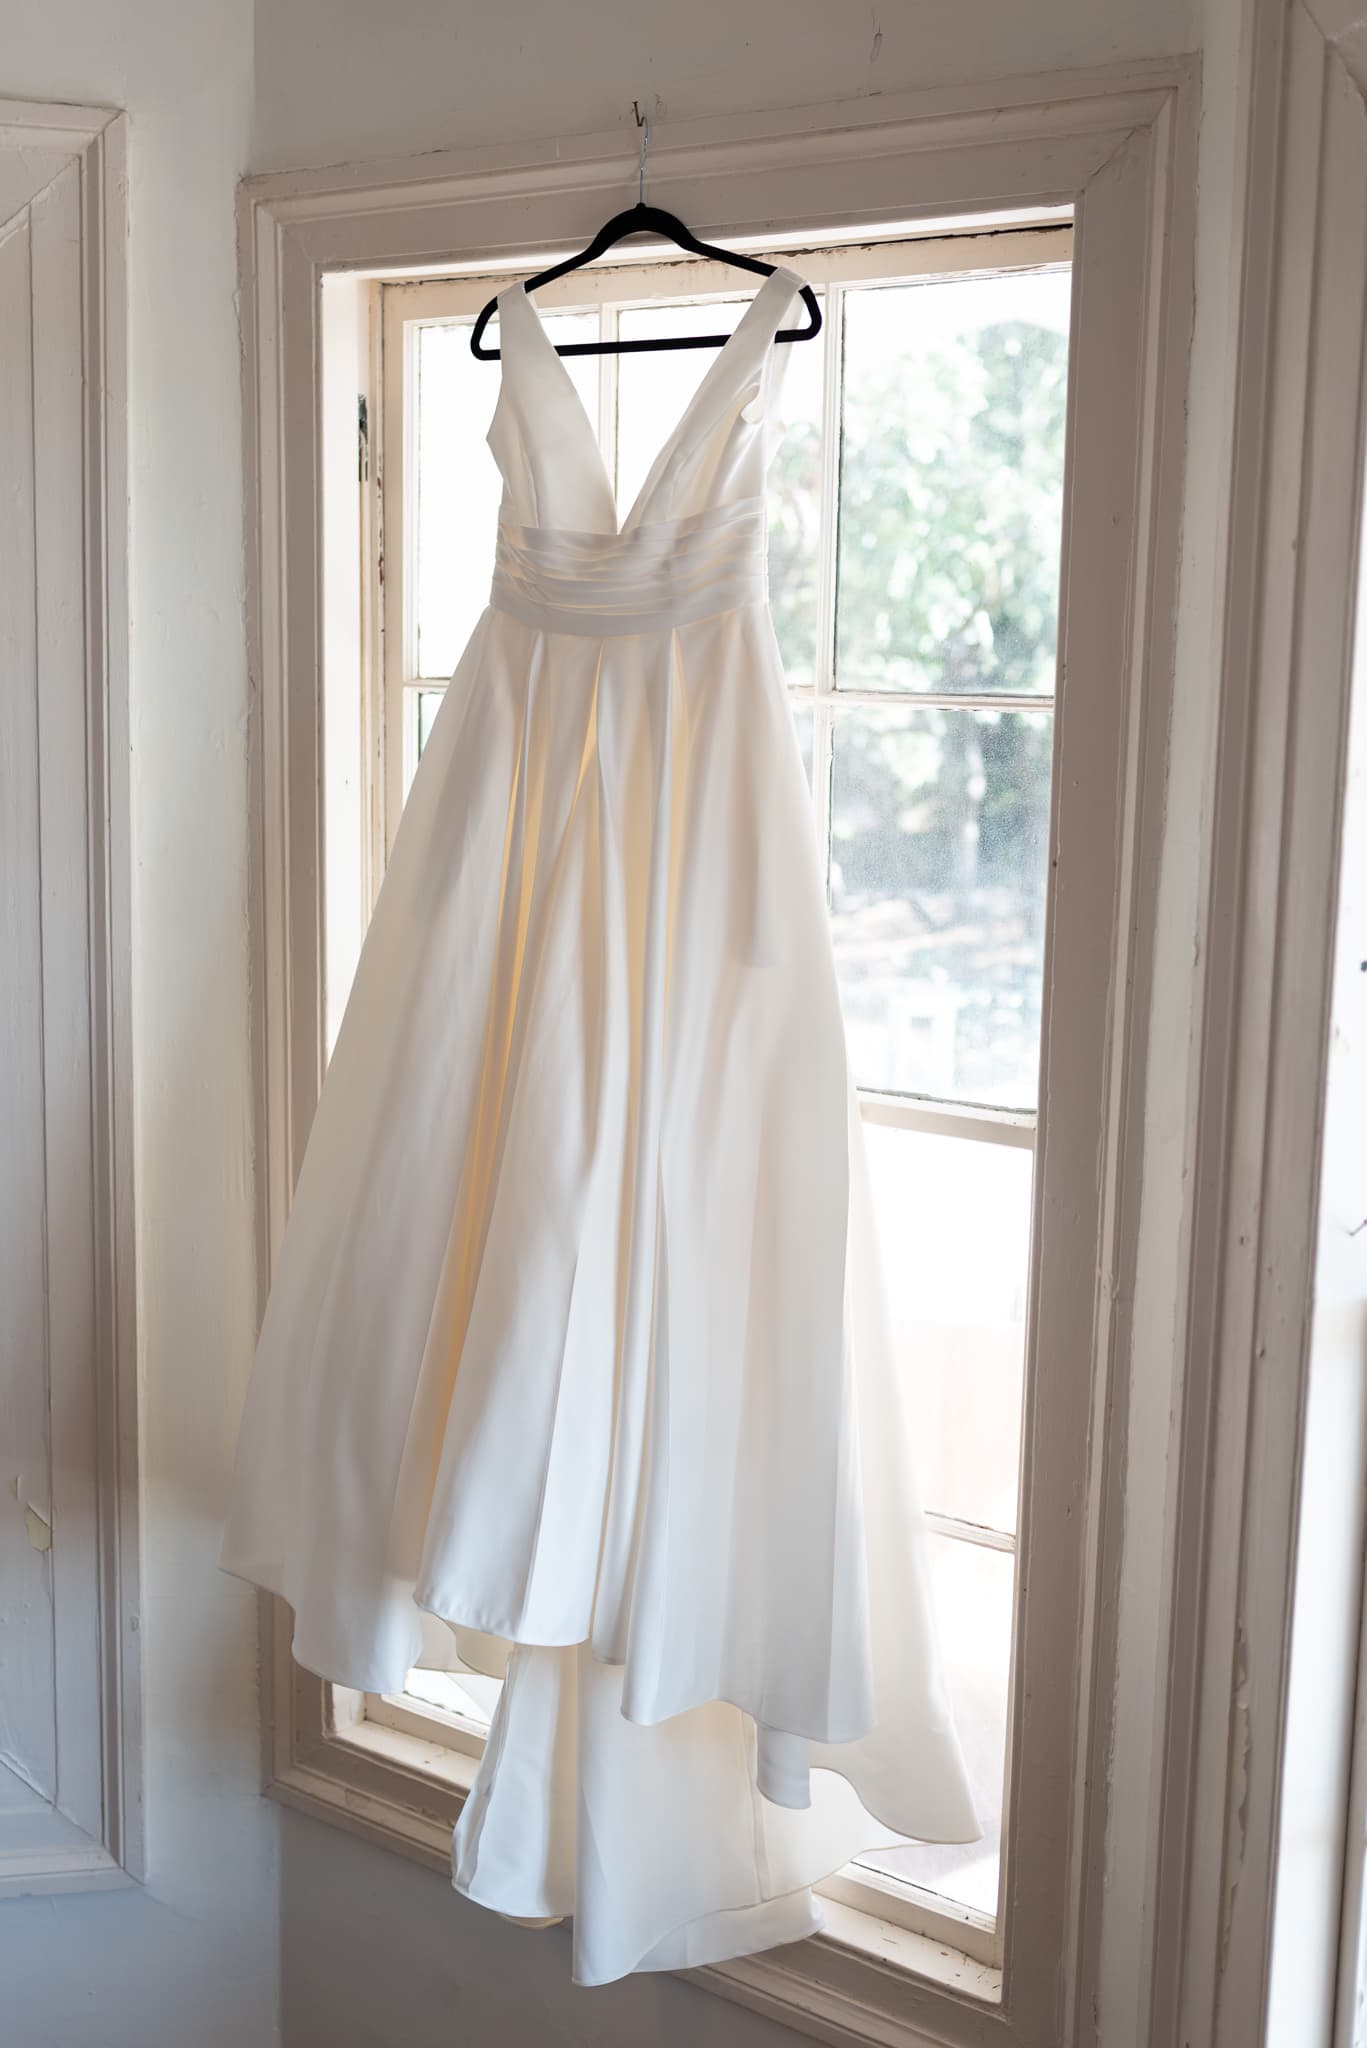 Bride's dress hanging in the window - Pelican Inn - Pawleys Island